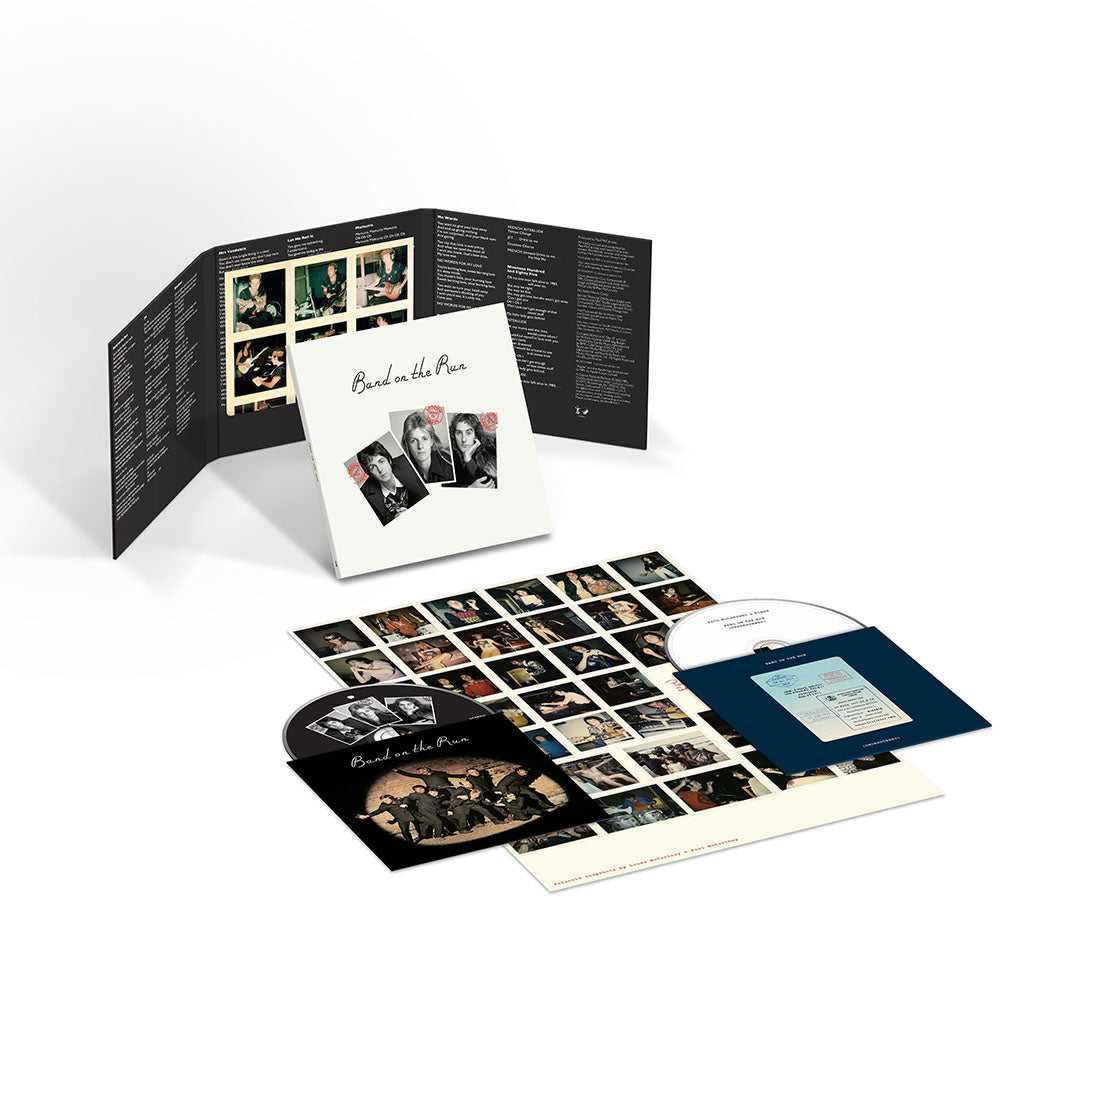 Paul McCartney & Wings - Band On the Run (50th Anniversary Edition): 2CD